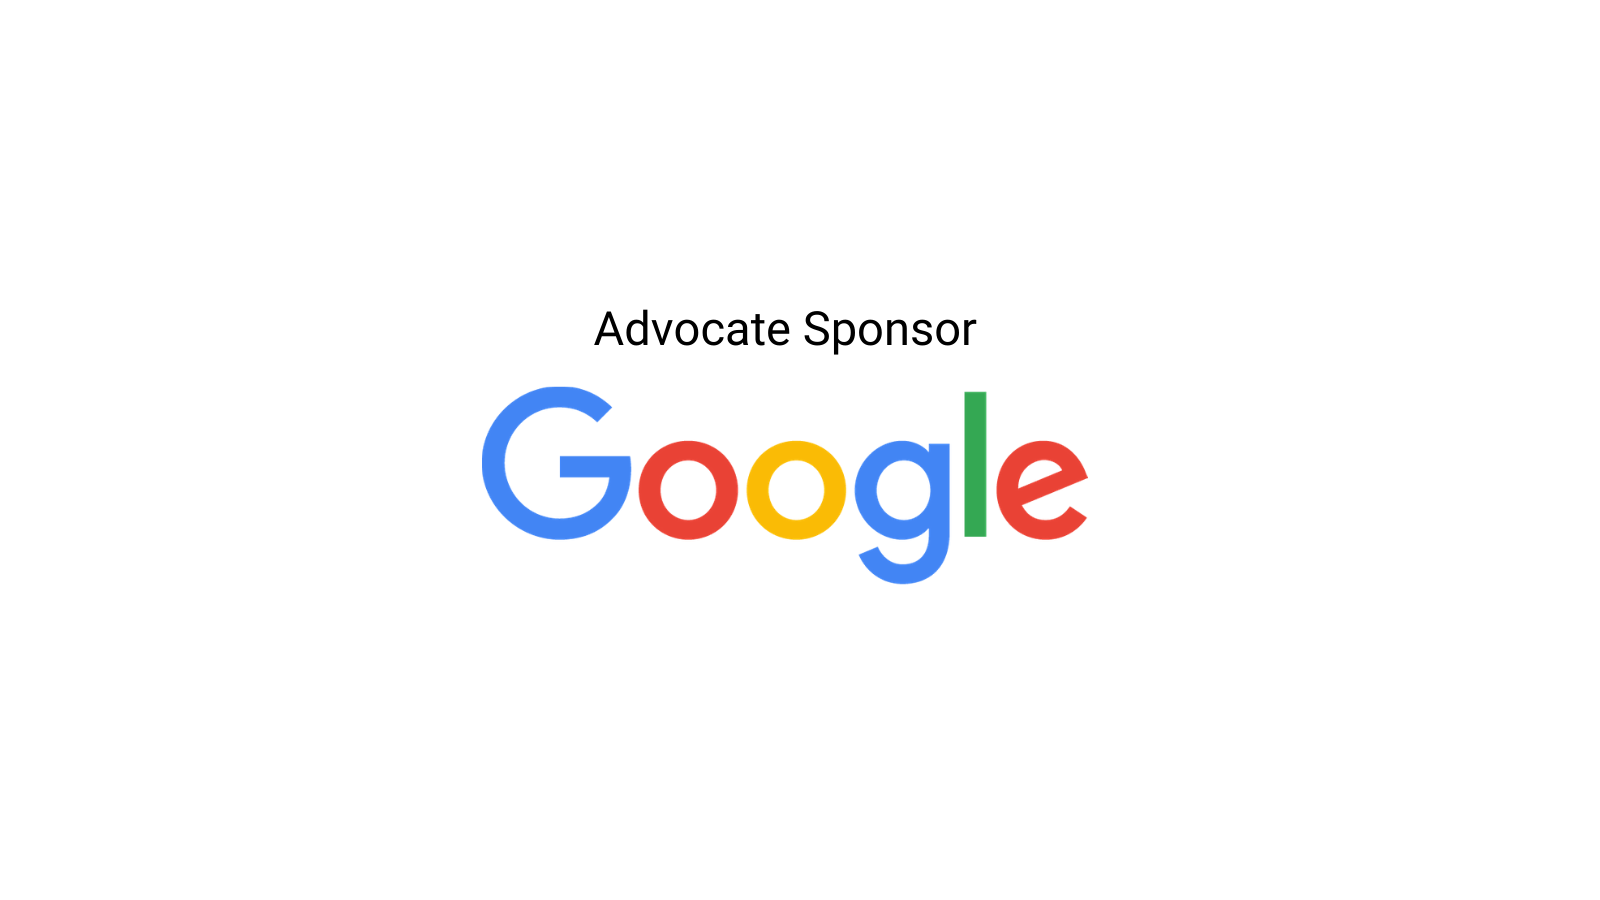 Google Advocate Sponsor